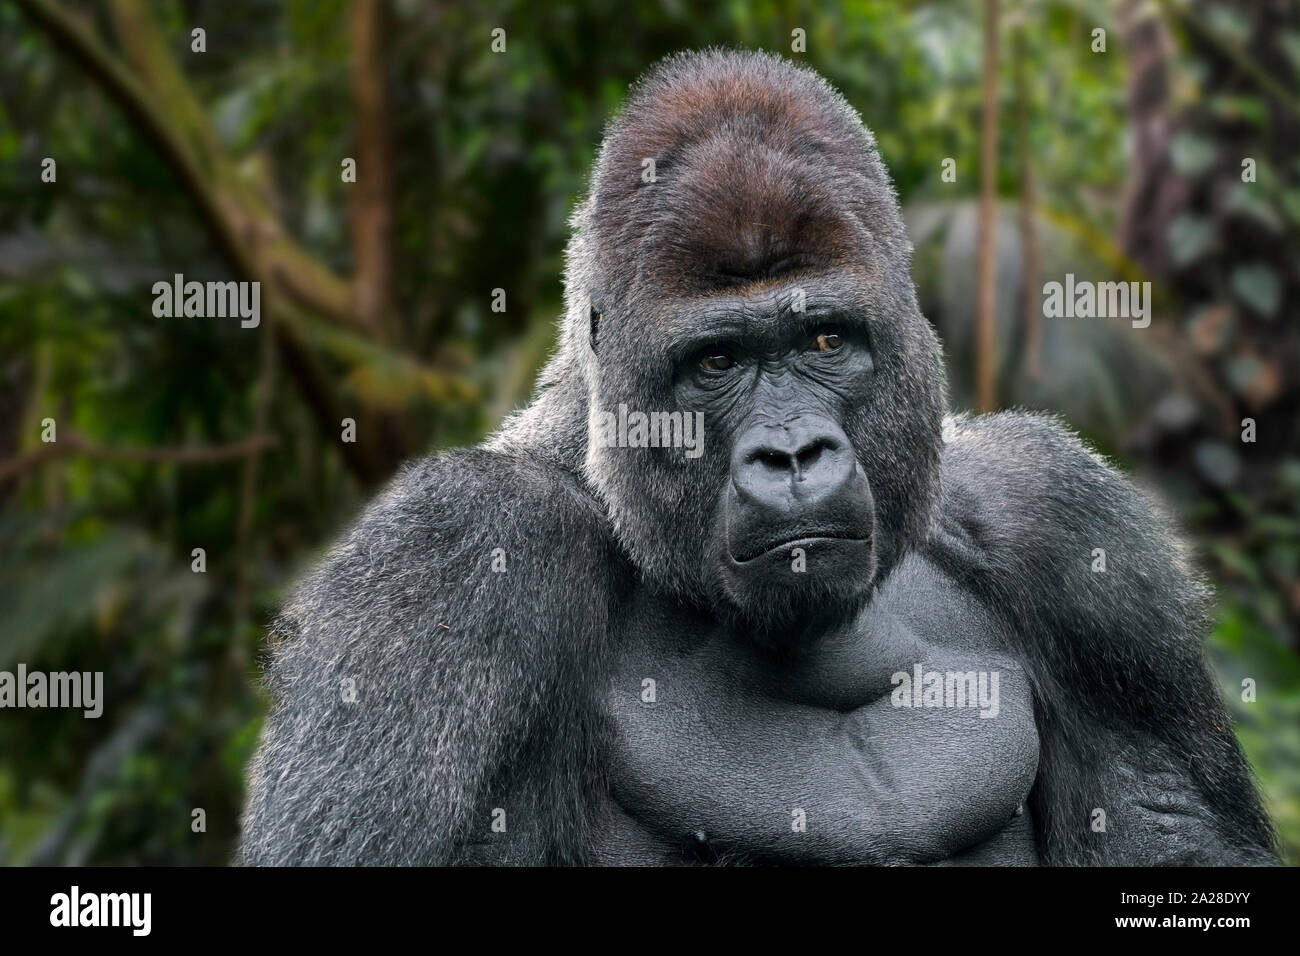 Gorila occidental de tierras bajas (gorila gorila) plata masculina nativa de la selva tropical en África central. Compuesto digital. Foto de stock